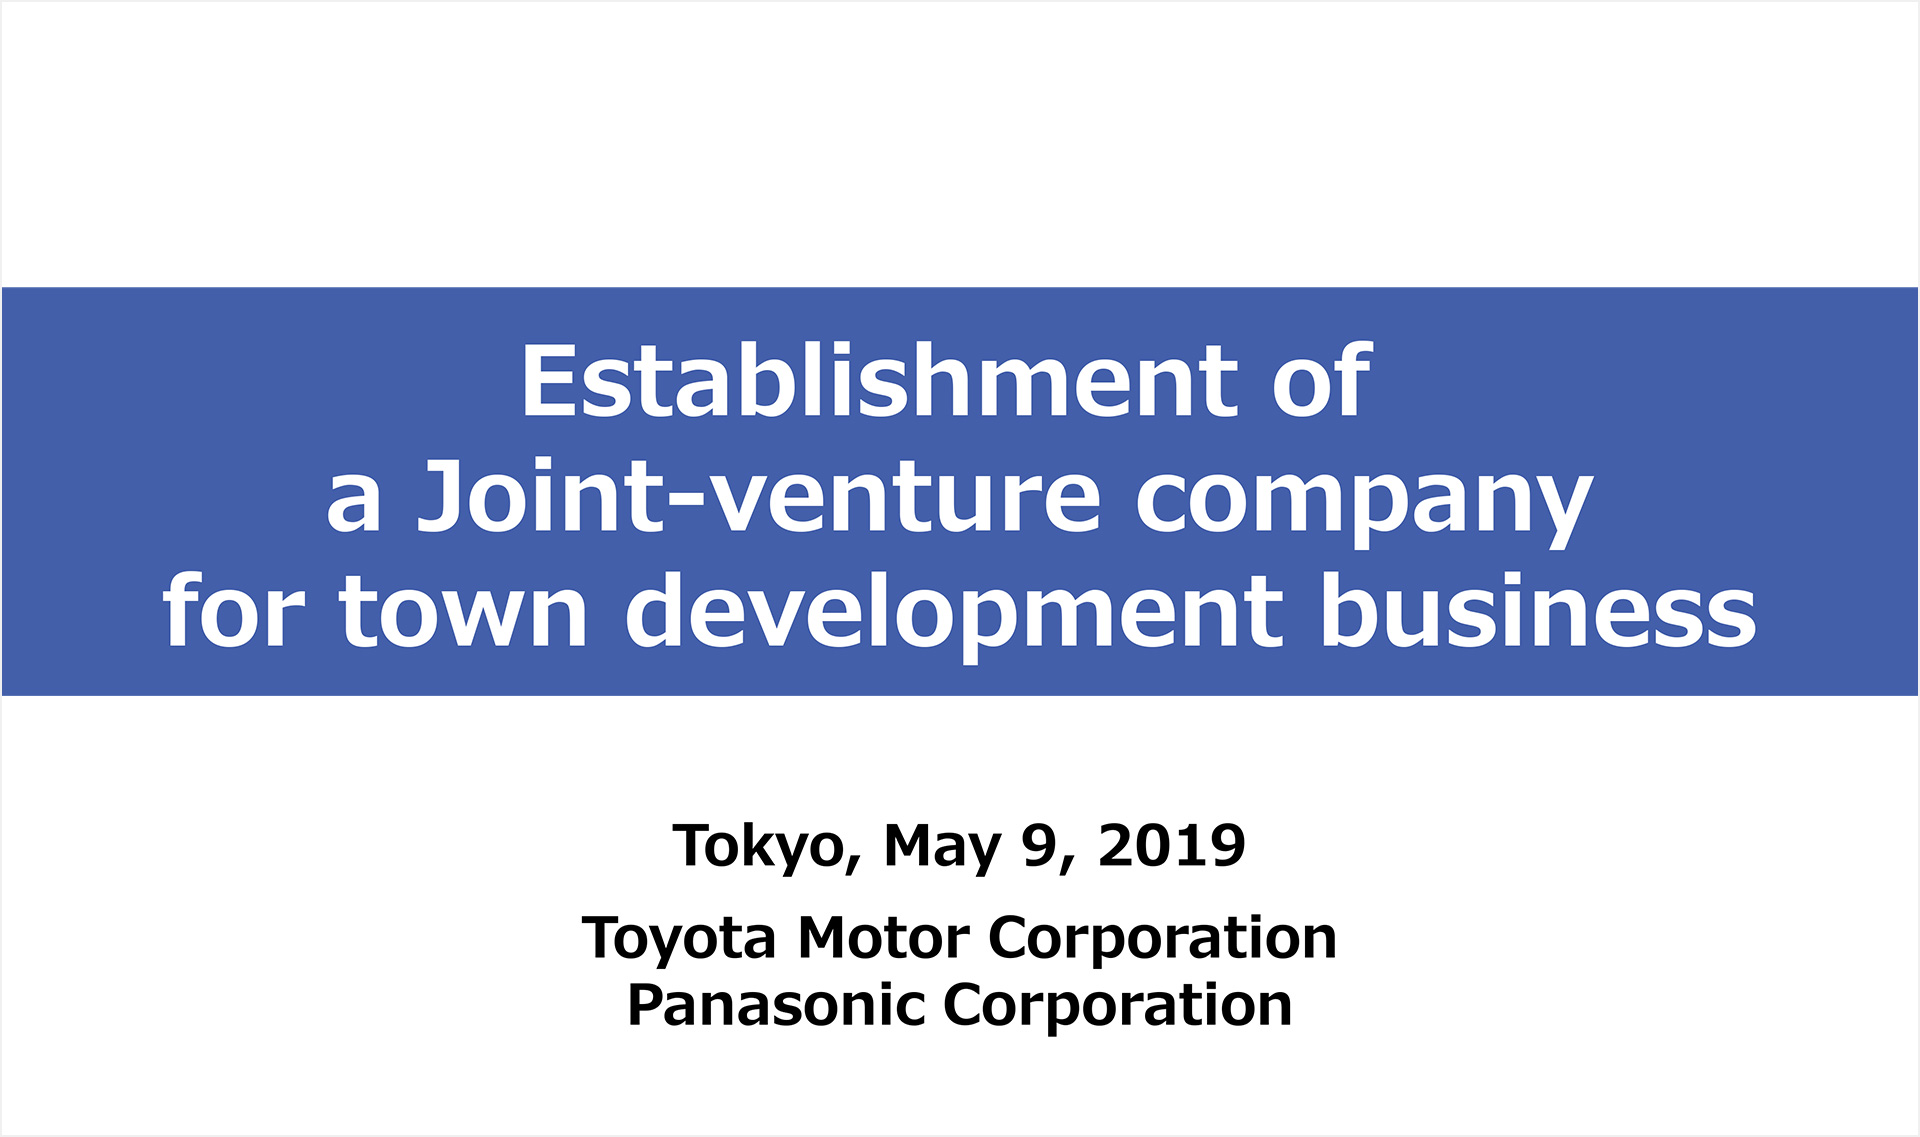 Establishment of a Joint-venture company for town development business